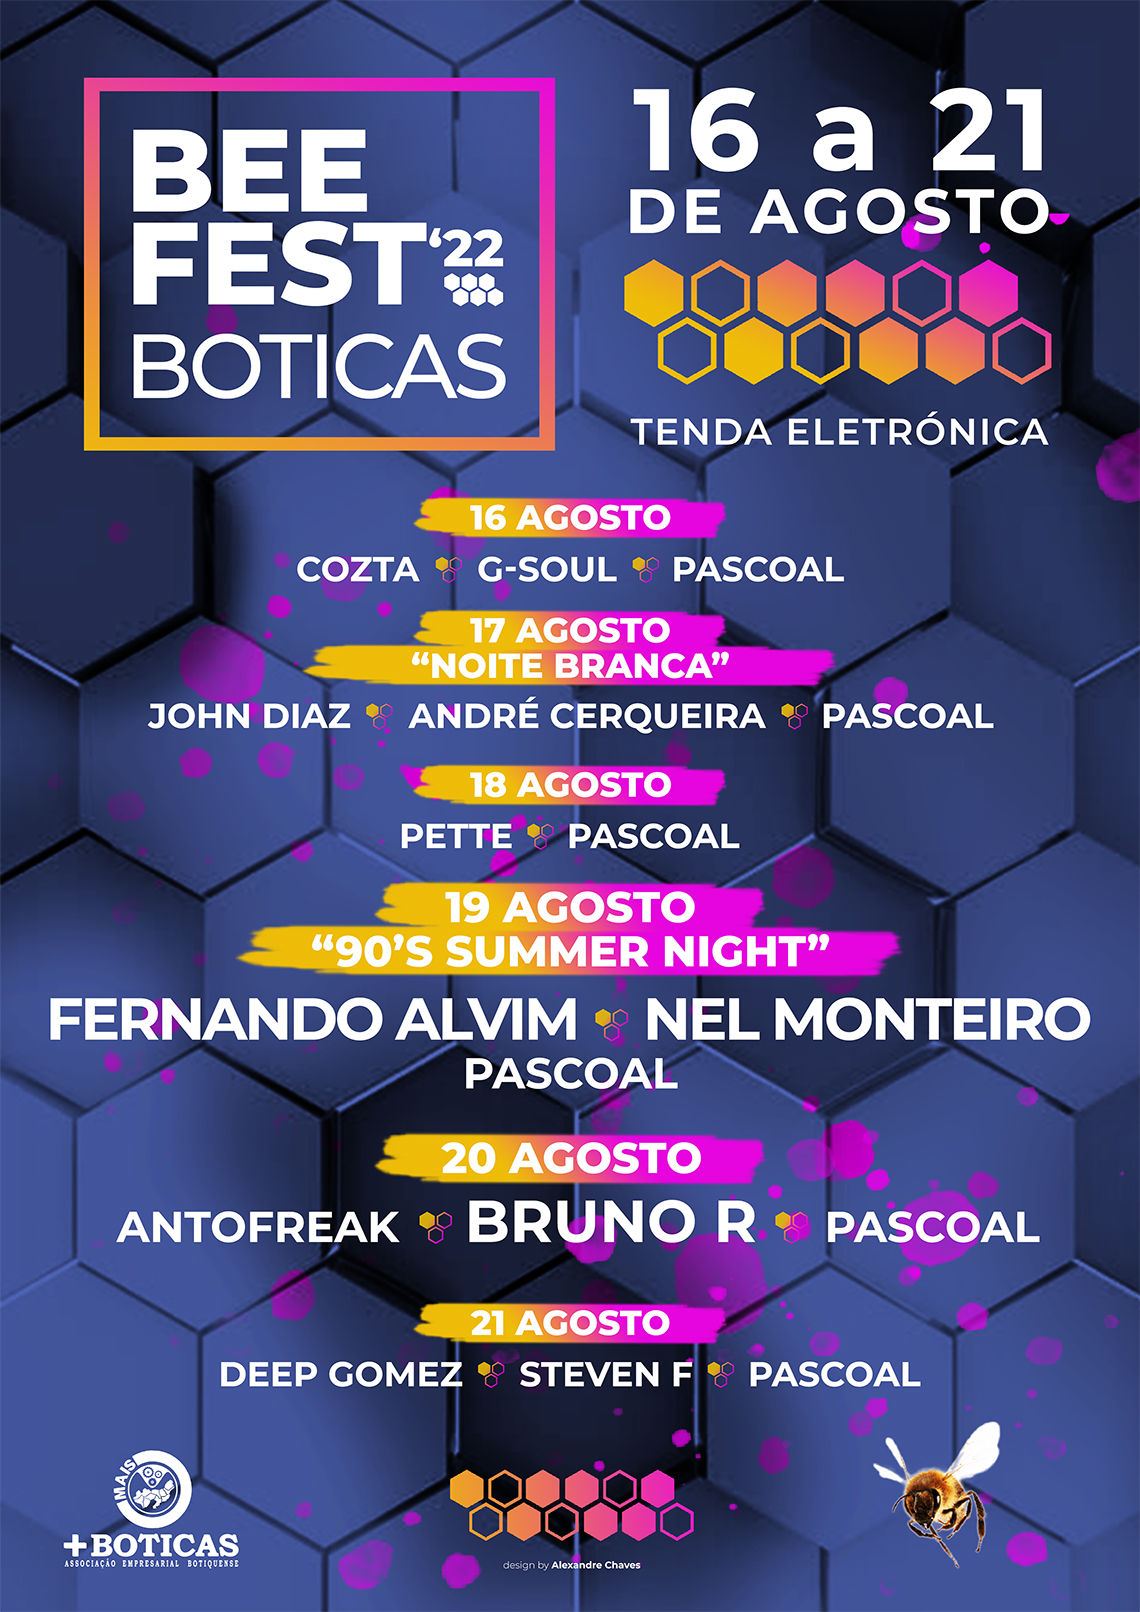 Boticas Bee Fest 2022